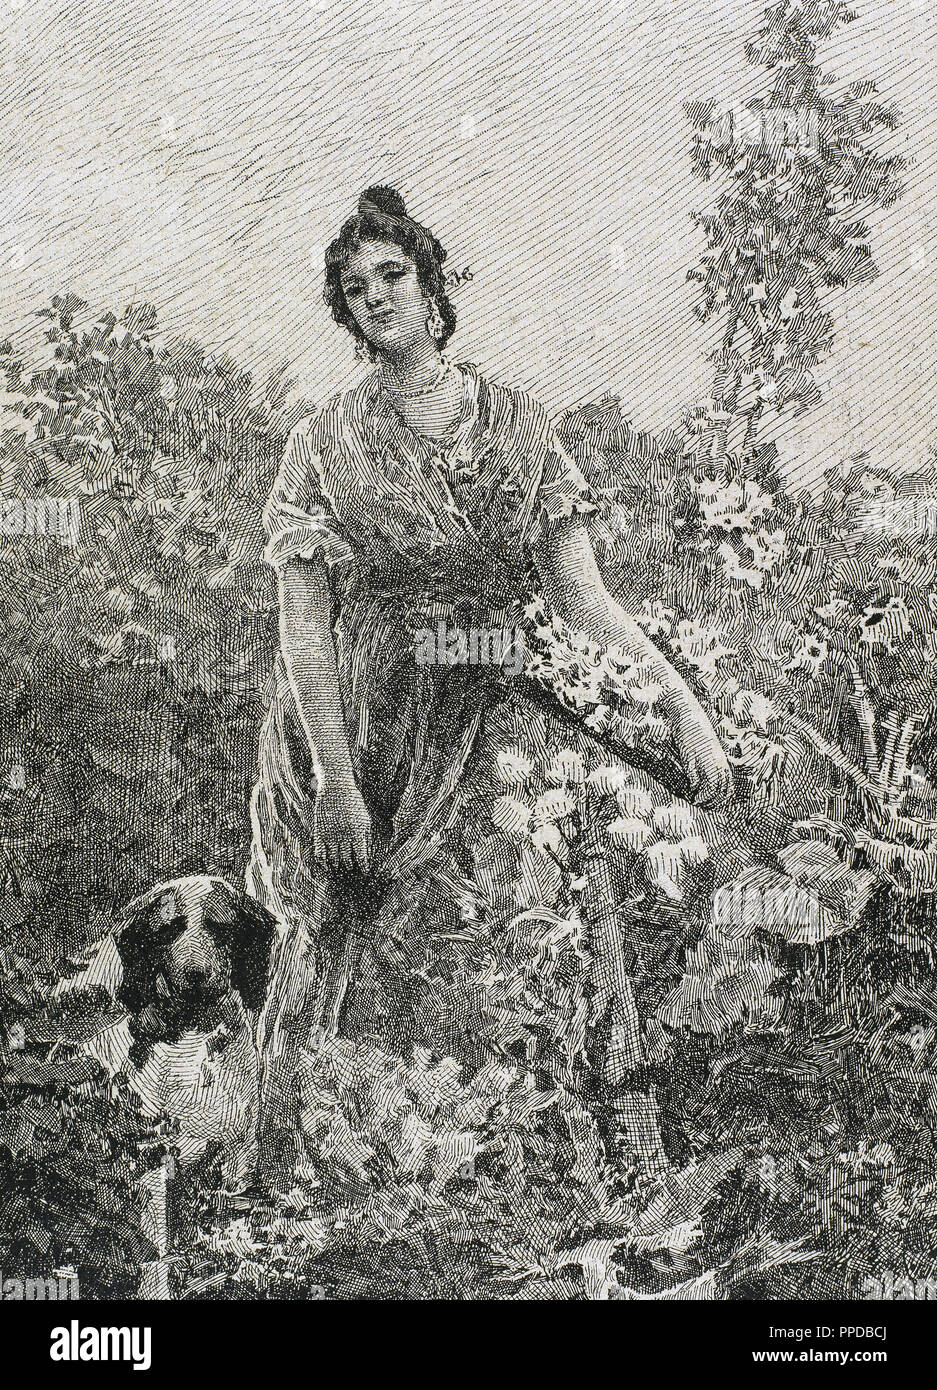 Valencia gardener. Engraving by Die´guez, 1867. Stock Photo